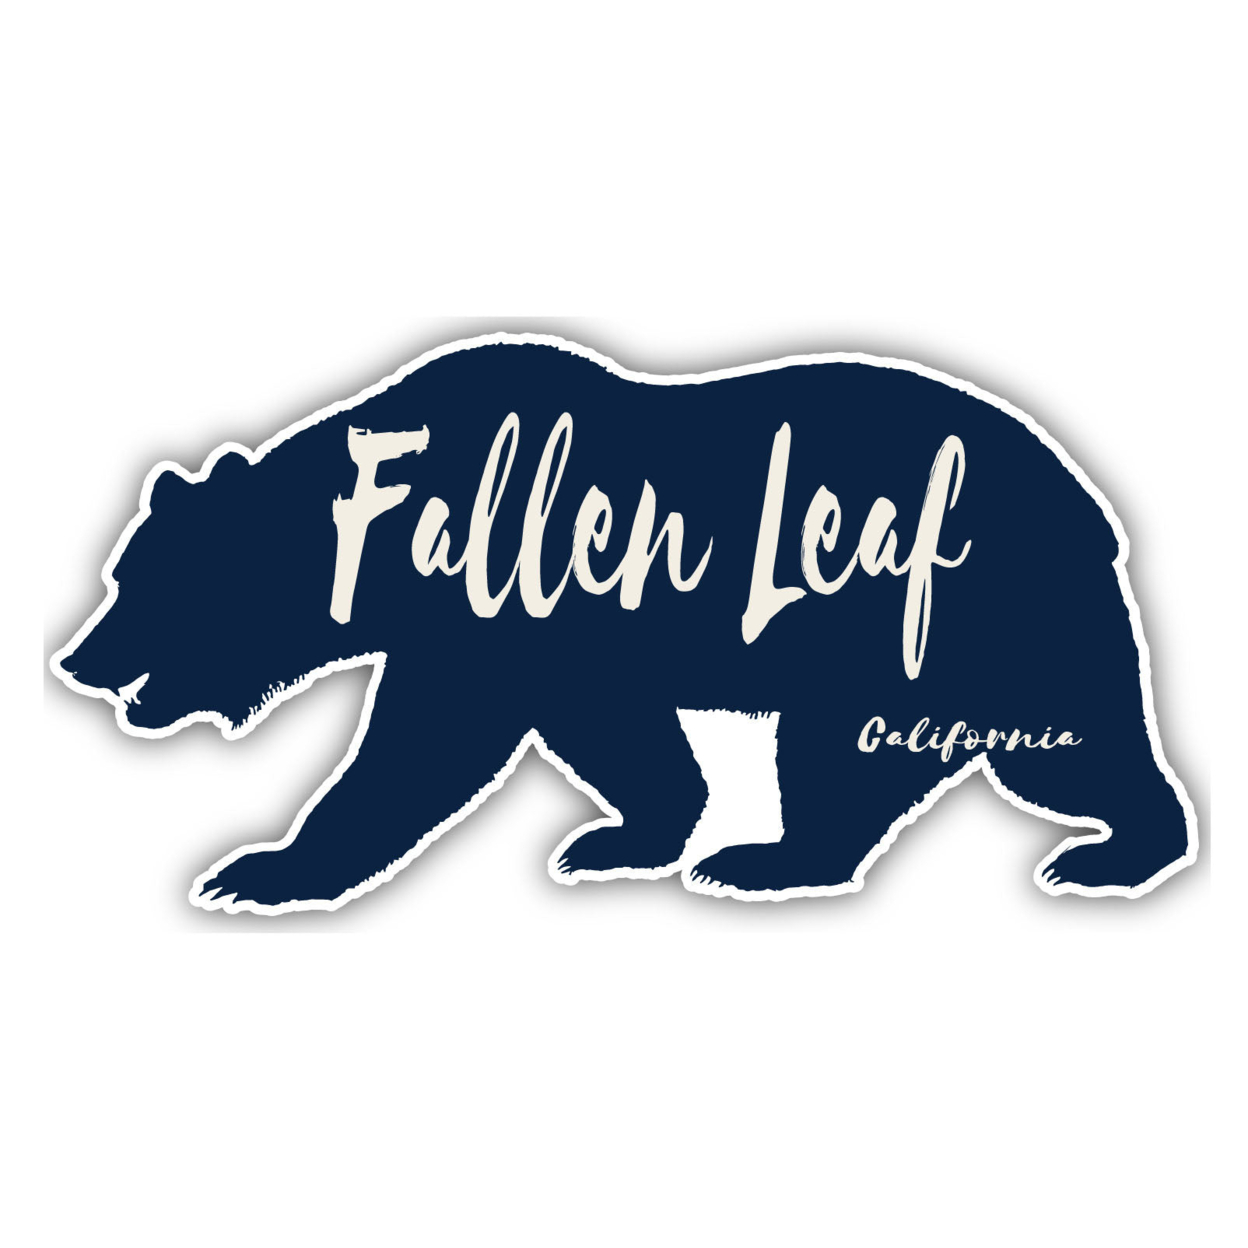 Fallen Leaf California Souvenir Decorative Stickers (Choose Theme And Size) - Single Unit, 8-Inch, Tent